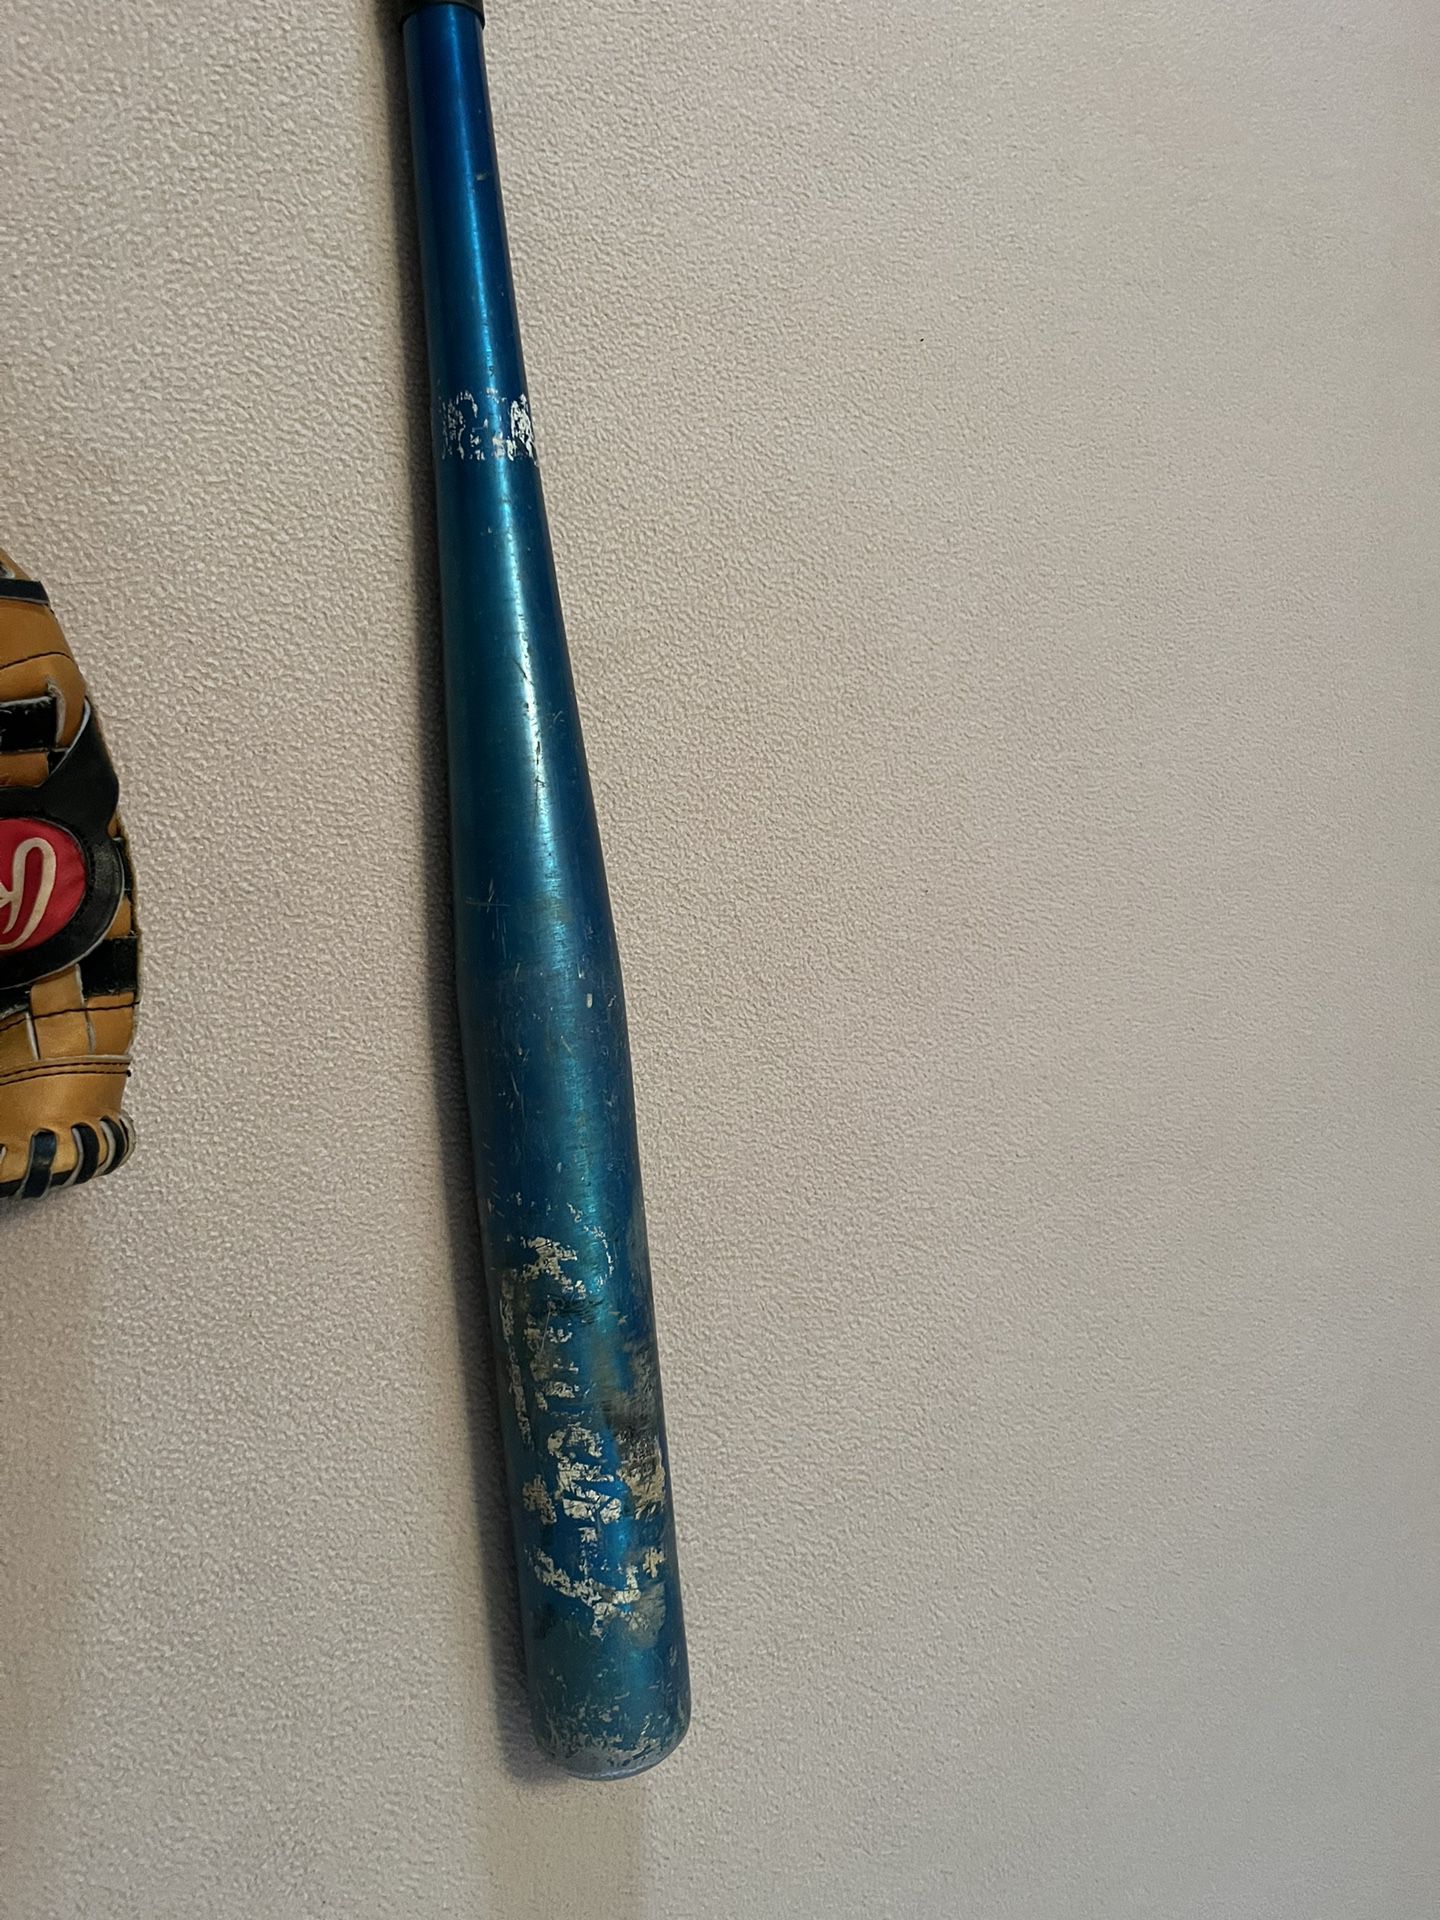 3 Gloves, Bat And Eastern Bag  For Softball $25